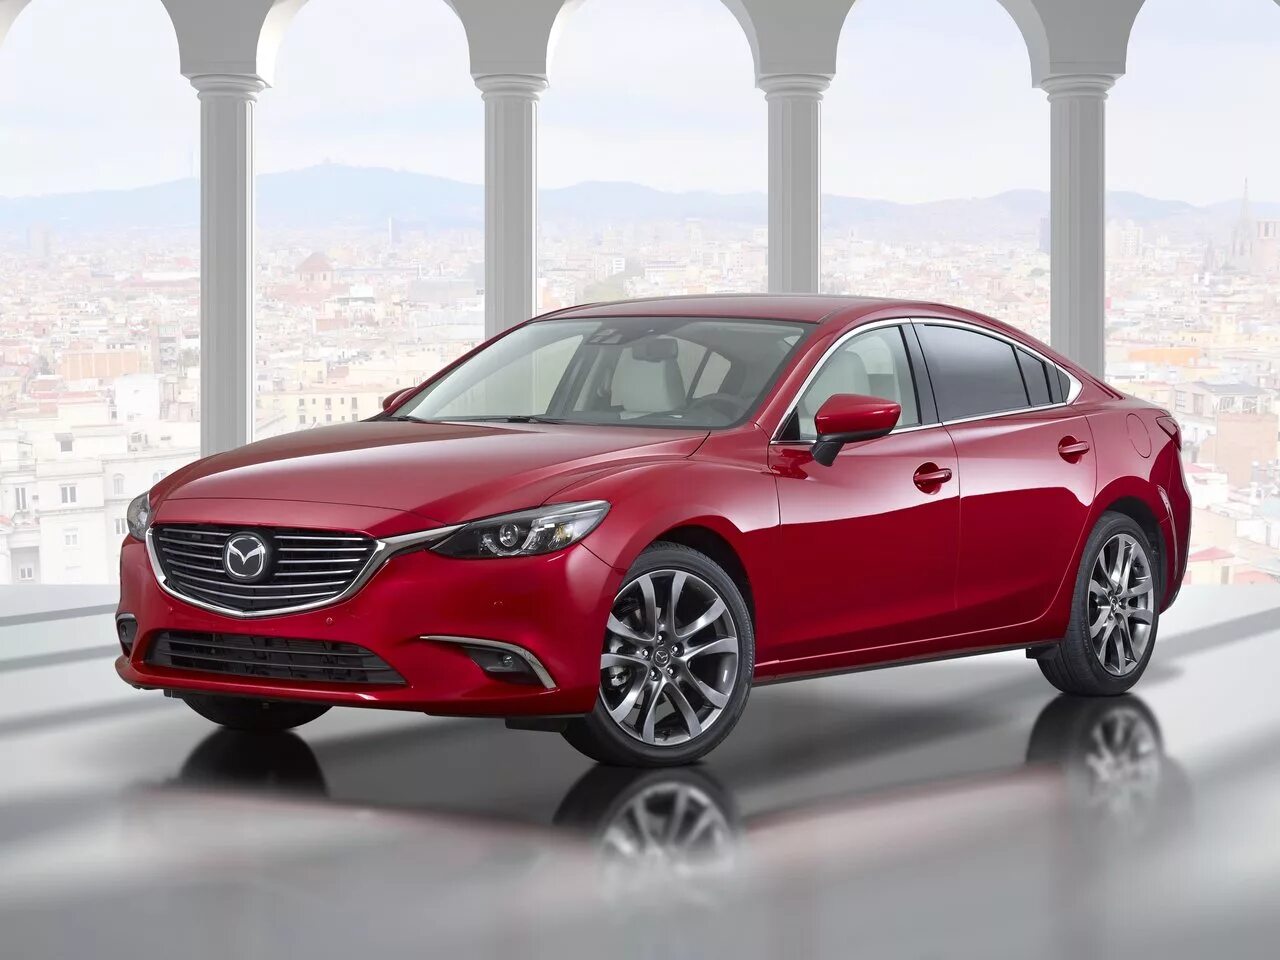 Mazda Mazda 6 2015. Мазда 6 седан 2018. Мазда 6 седан седан. Mazda 6 2015 седан. 23.06 2015